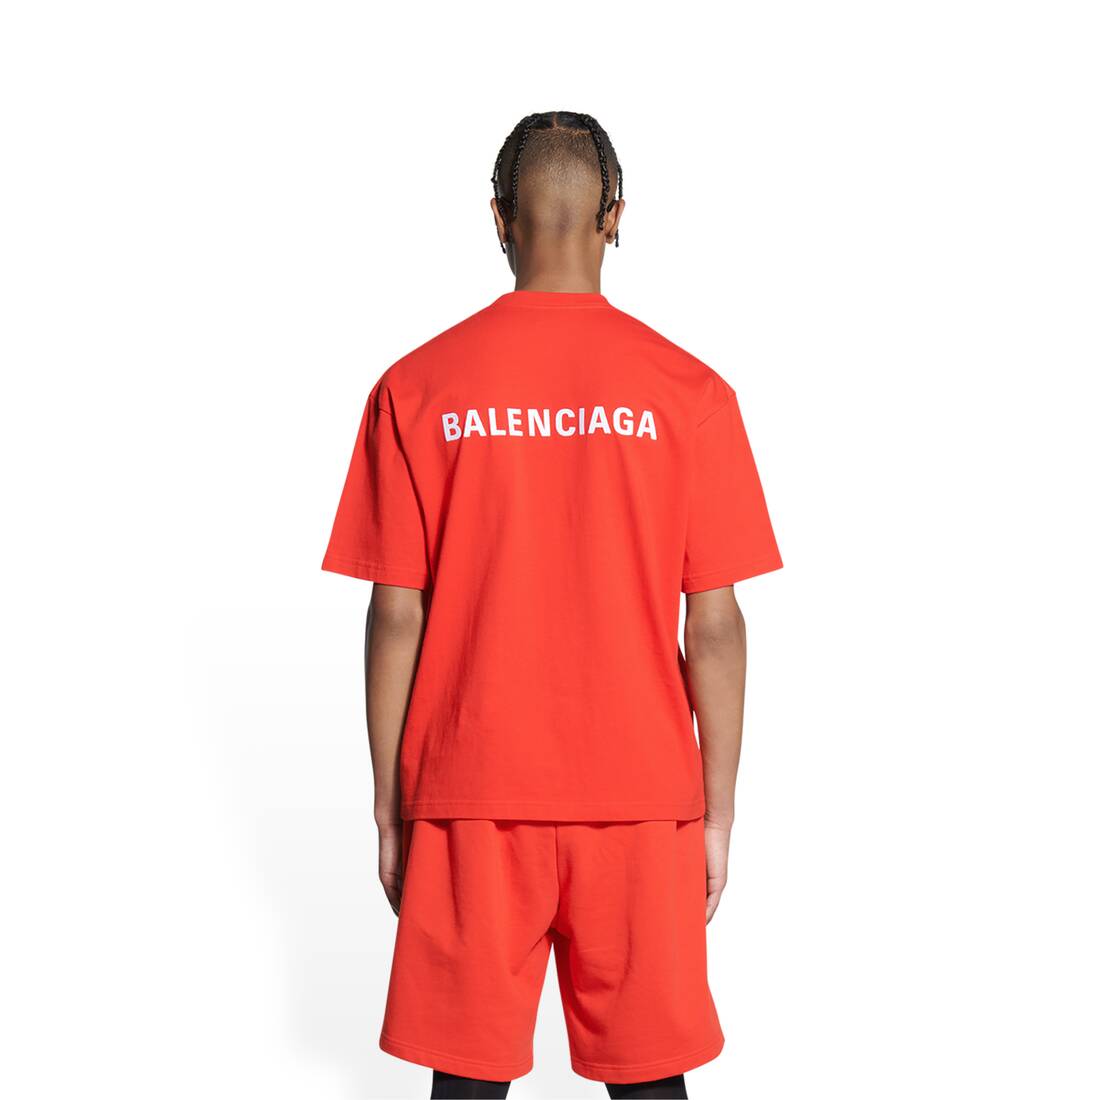 Men's Balenciaga T-shirt Regular Fit in Red | Balenciaga US